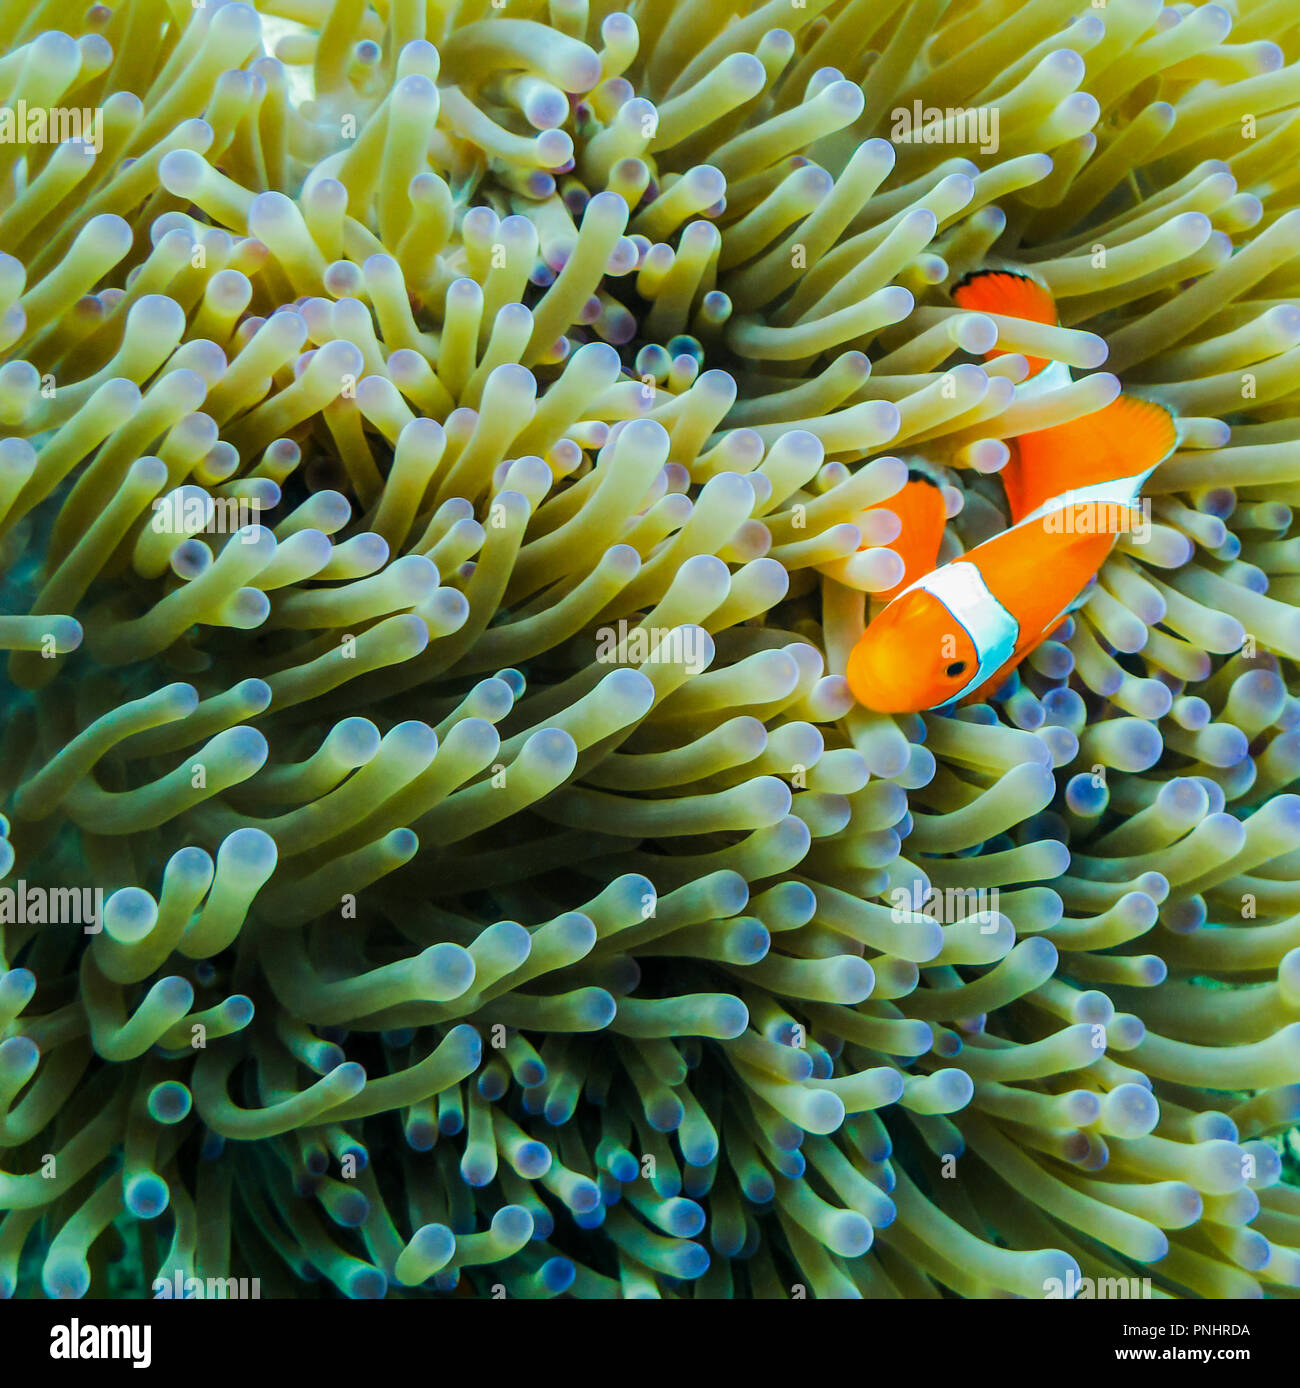 Ocellaris clownfish (Amphiprion ocellaris) on Sea Anemone Stock Photo